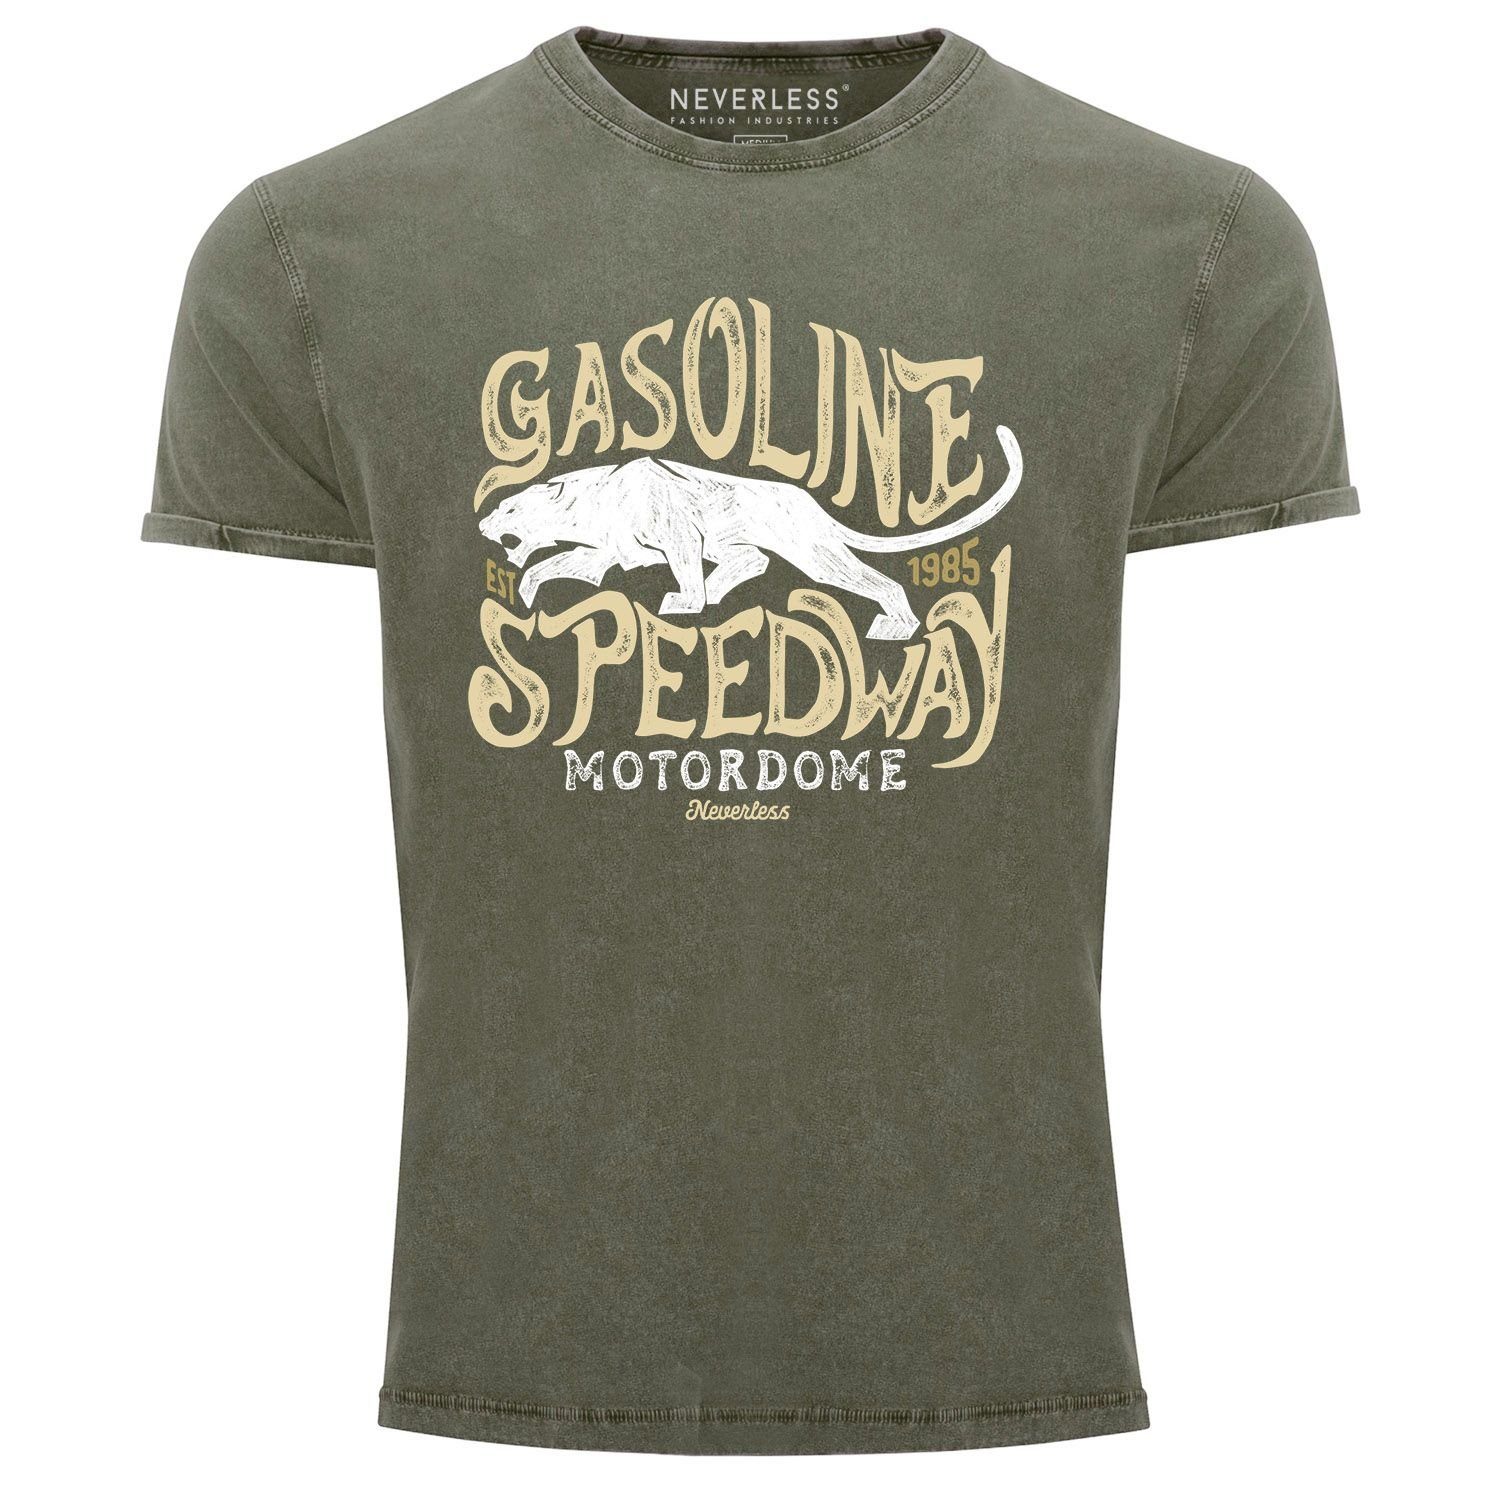 Neverless Print-Shirt Neverless® Herren T-Shirt Vintage Shirt Printshirt Gasoline Speedway Panther Motiv Used Look Slim Fit mit Print oliv